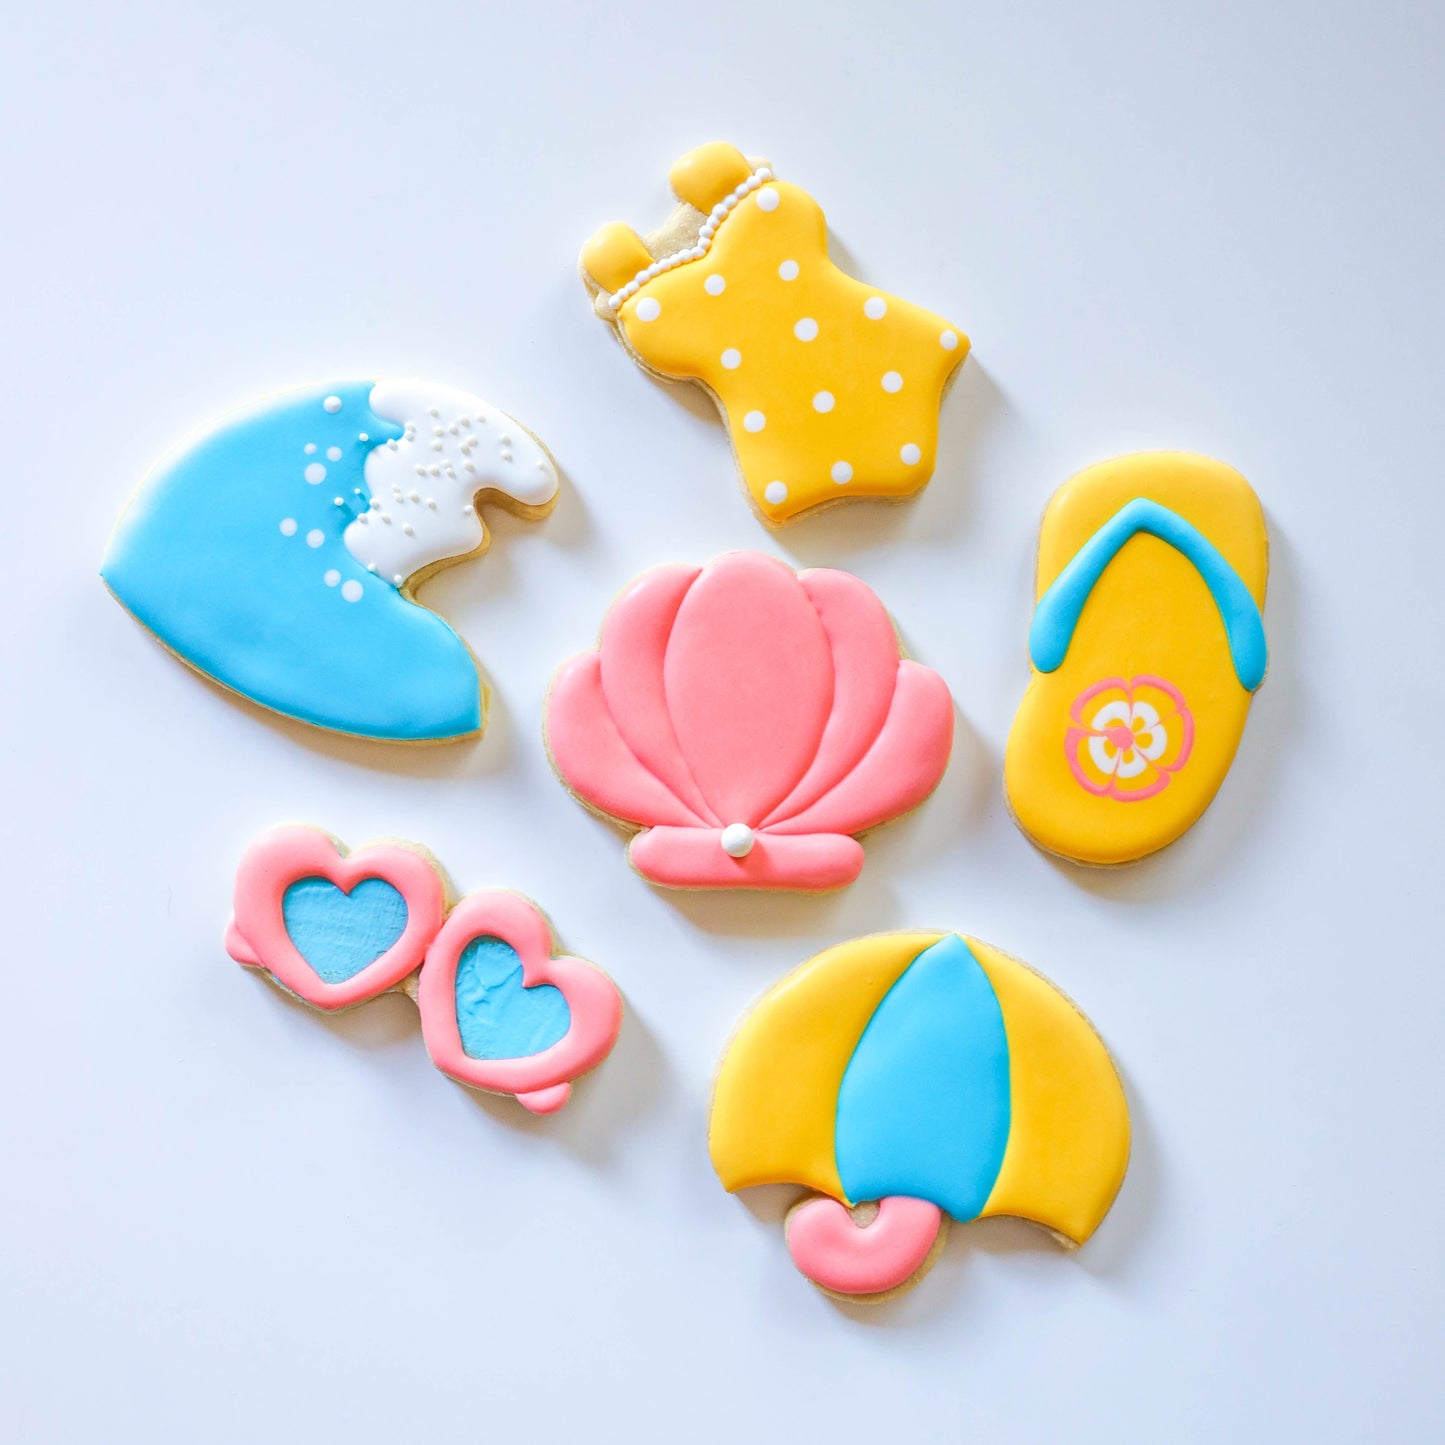 DIY Cookie Decorating Kits!